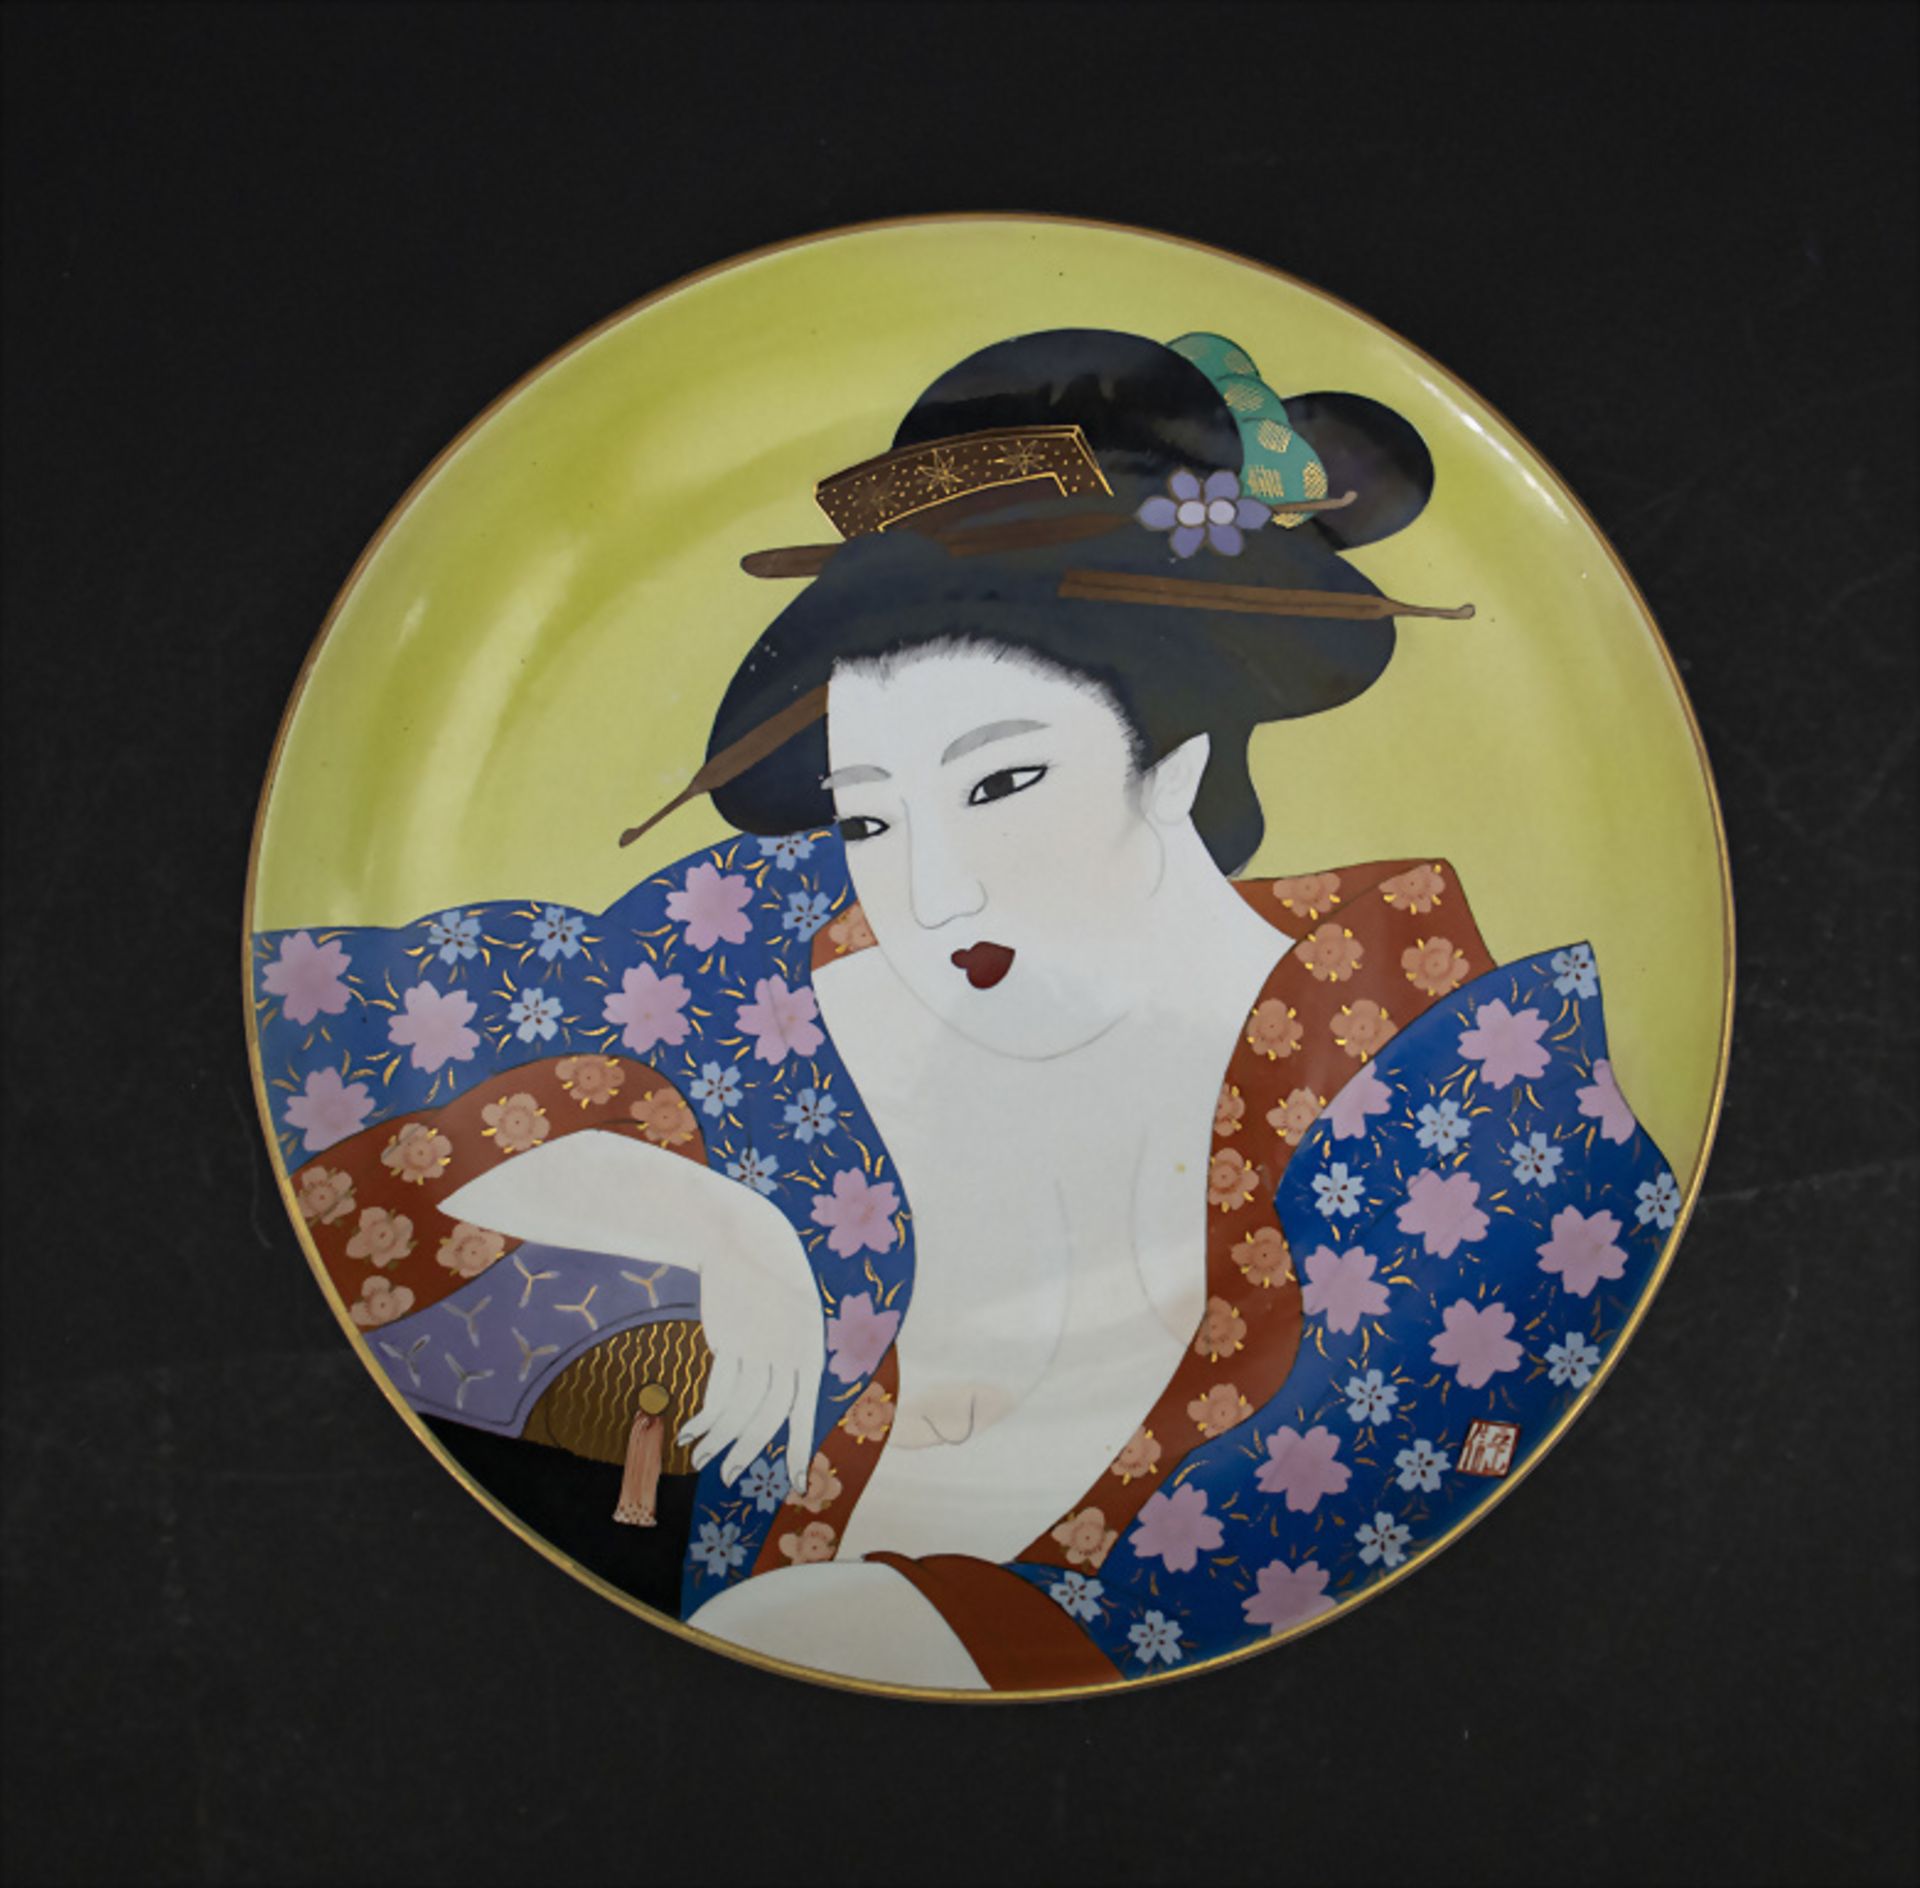 Erotische Platte (Wandteller) mit Geisha / An erotic wall plate with a Geisha, Japan, um 1900